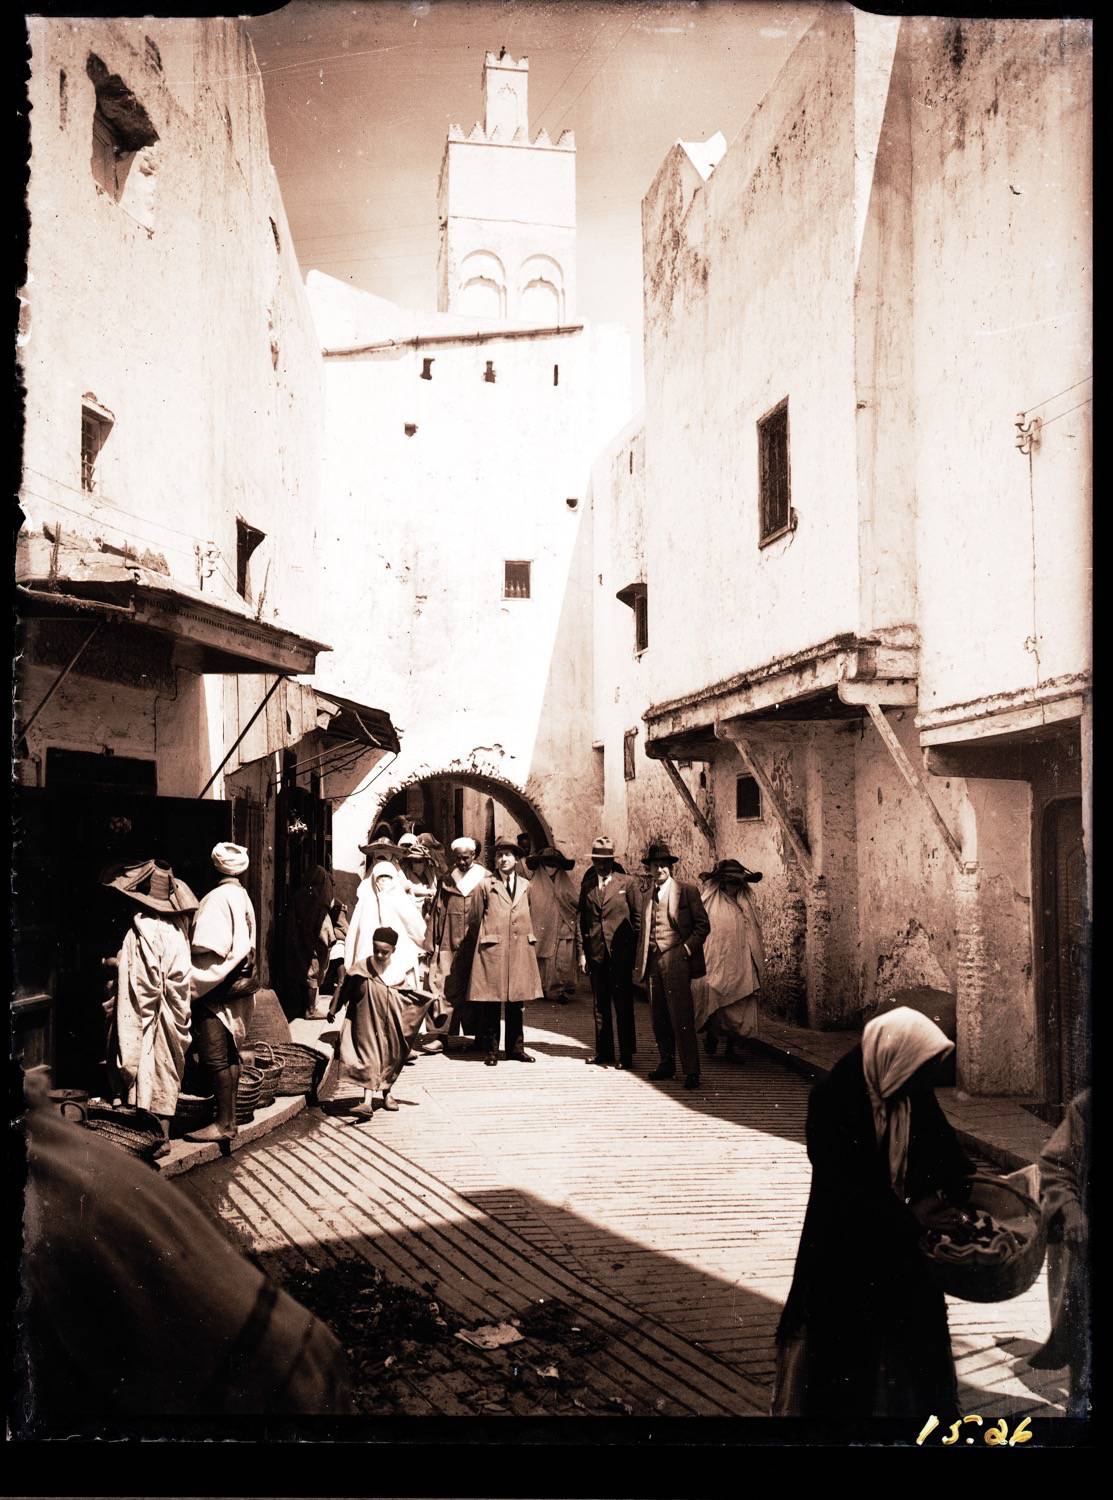 Streetscape, public square in the medina toward a mosque